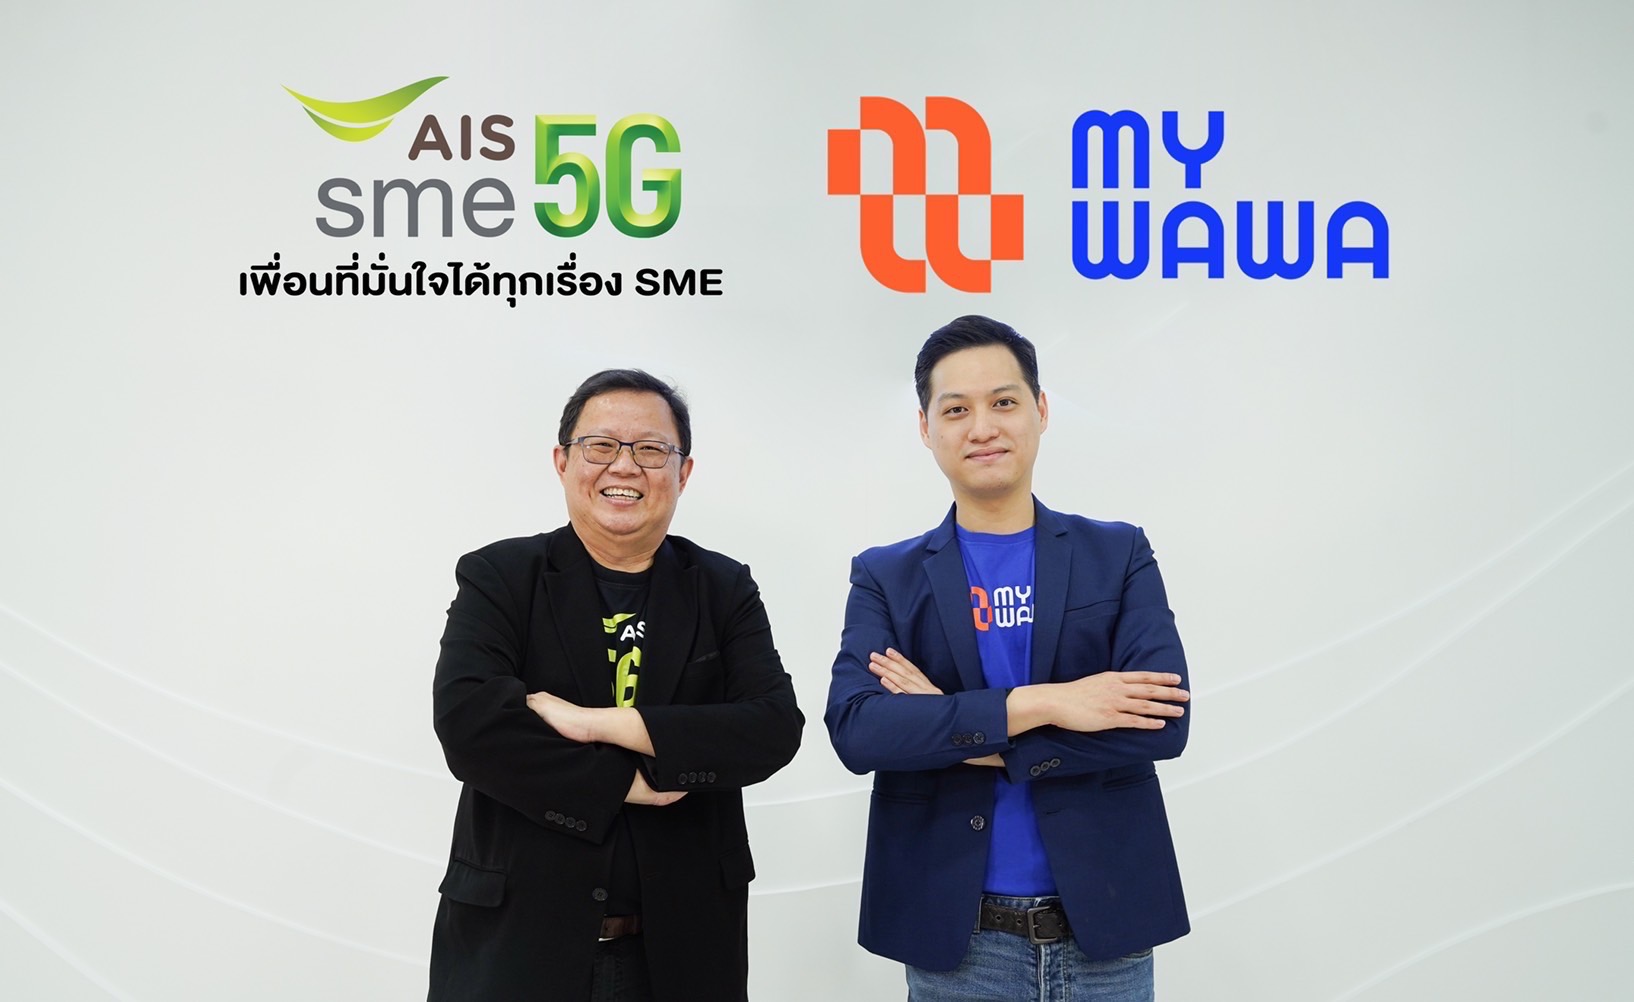 AIS หนุน SMEs ไทย จับมือ MyWaWa แพลตฟอร์ม B2B อีมาร์เก็ตเพลสสัญชาติไทย ให้ลูกค้า AIS SME สมาชิก BIZ UP รับสิทธิพิเศษลด 3.5% นาน 1 ปี ดันผู้ประกอบการไทยทรานส์ฟอร์มสู่โลกการค้ายุคดิจิทัล